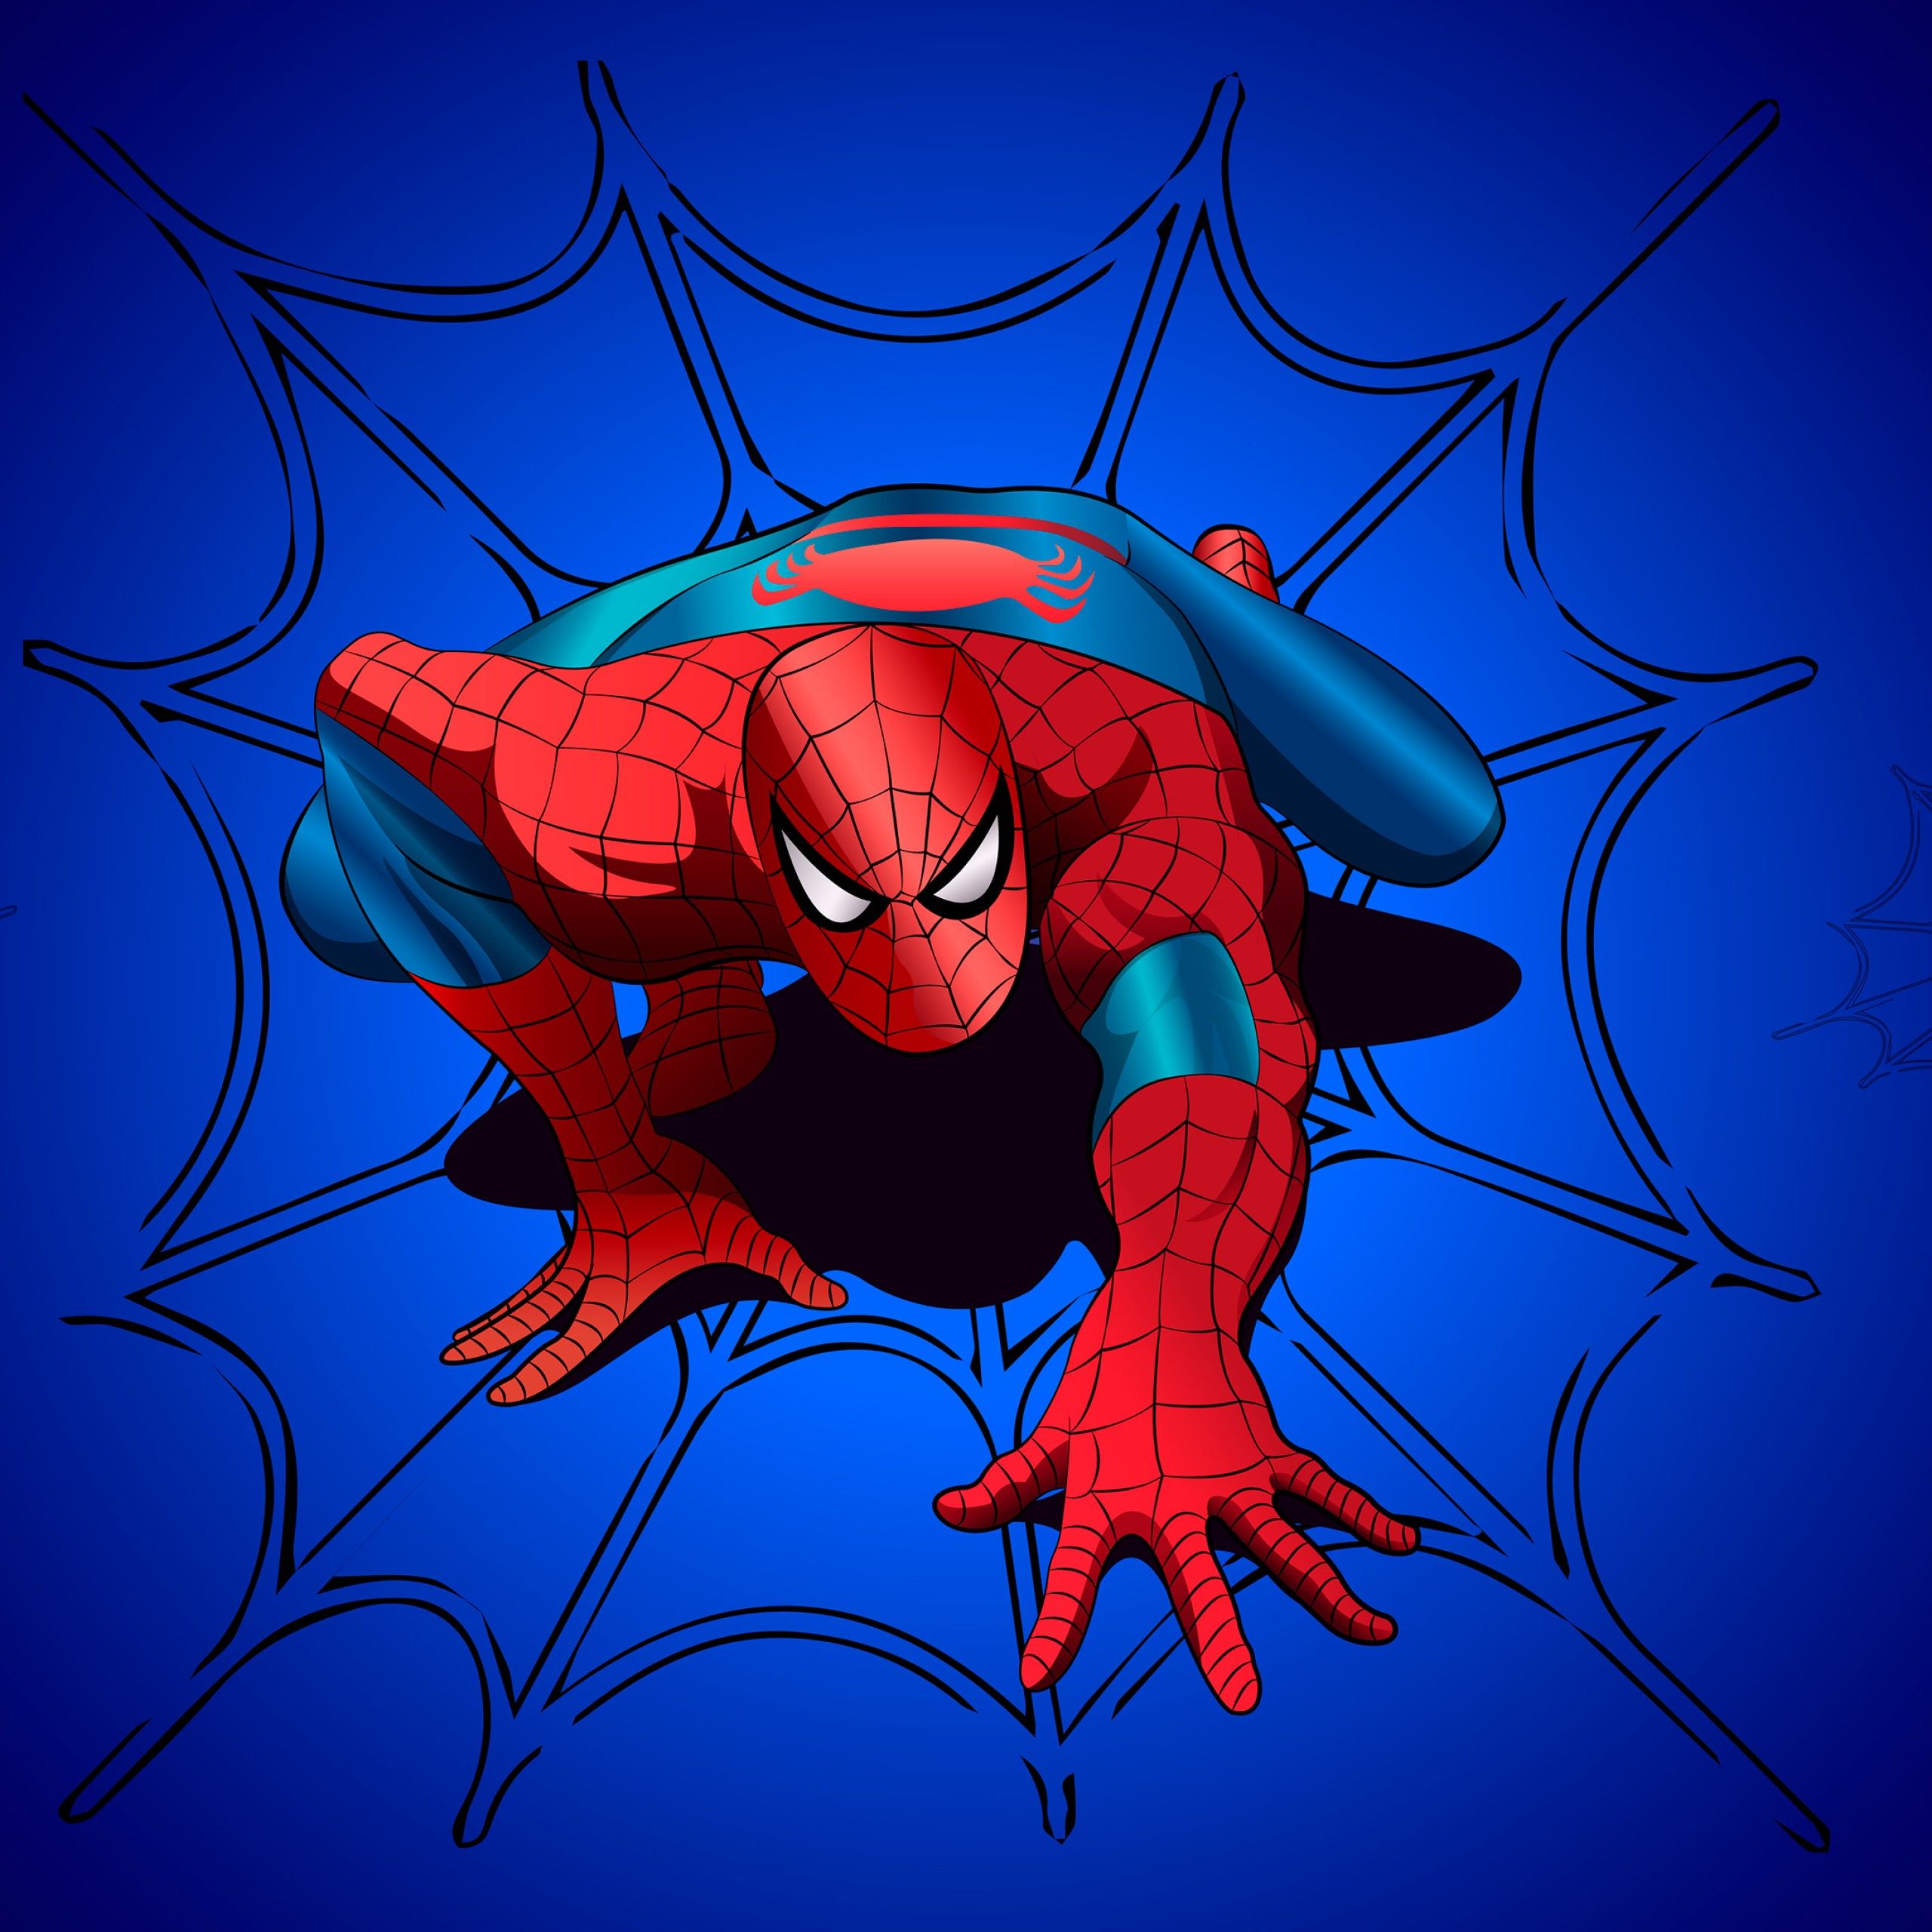 Spider Man 4K Wallpaper, Blue .4kwallpaper.com